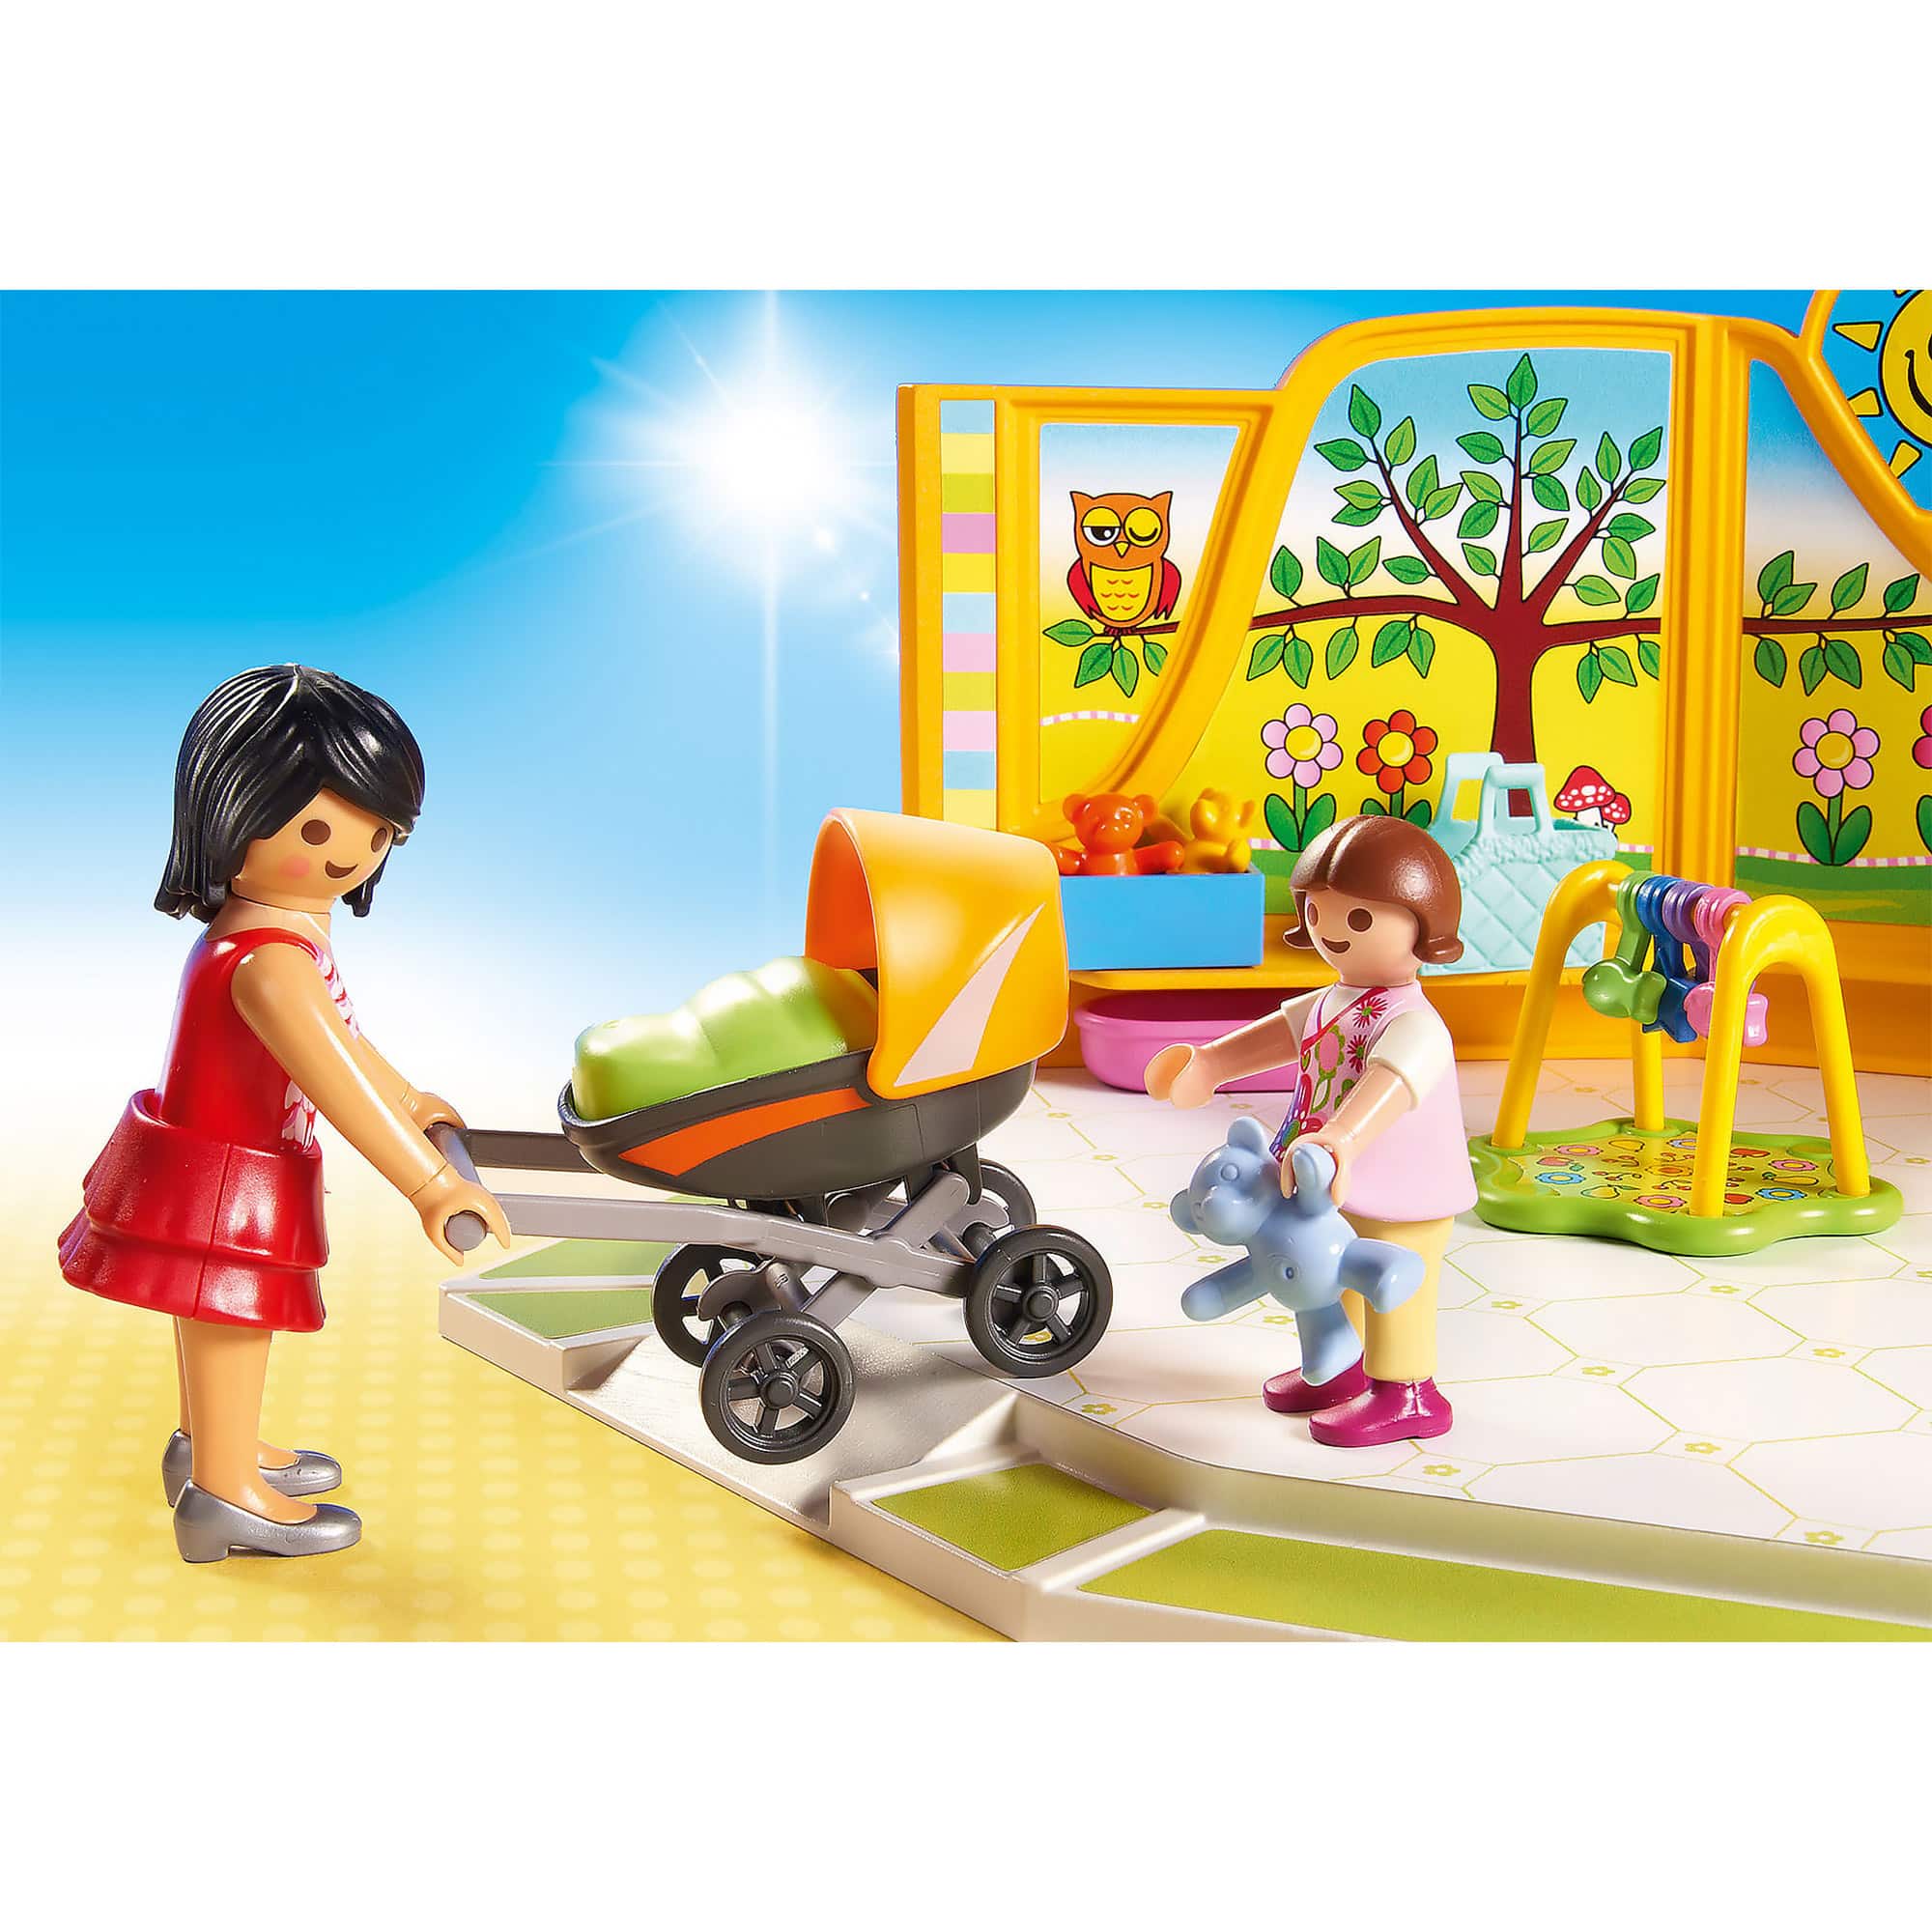 Playmobil - City Life - Baby Store 9079